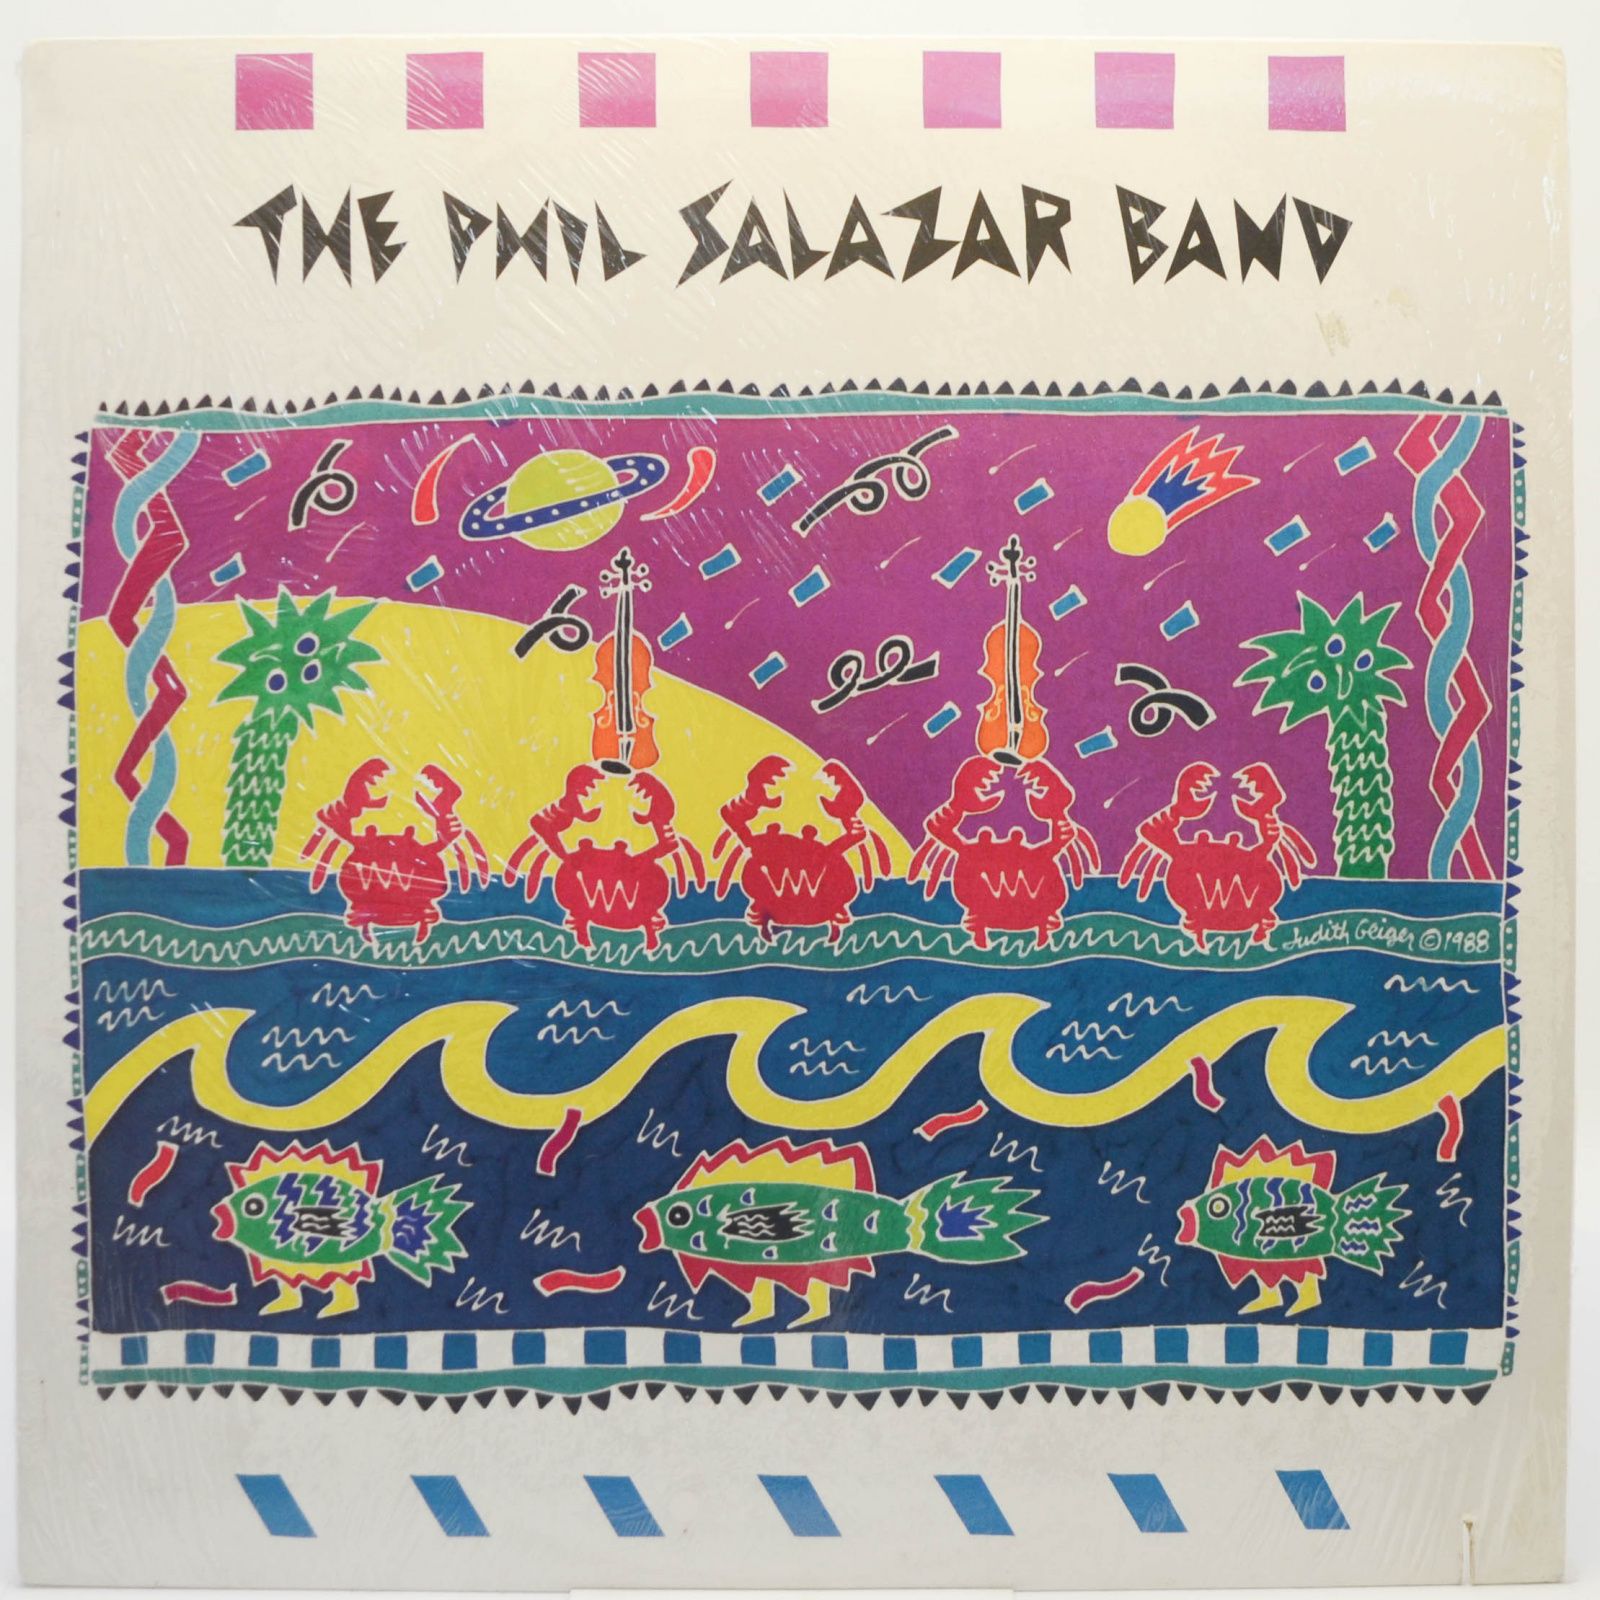 The Phil Salazar Band, 1989